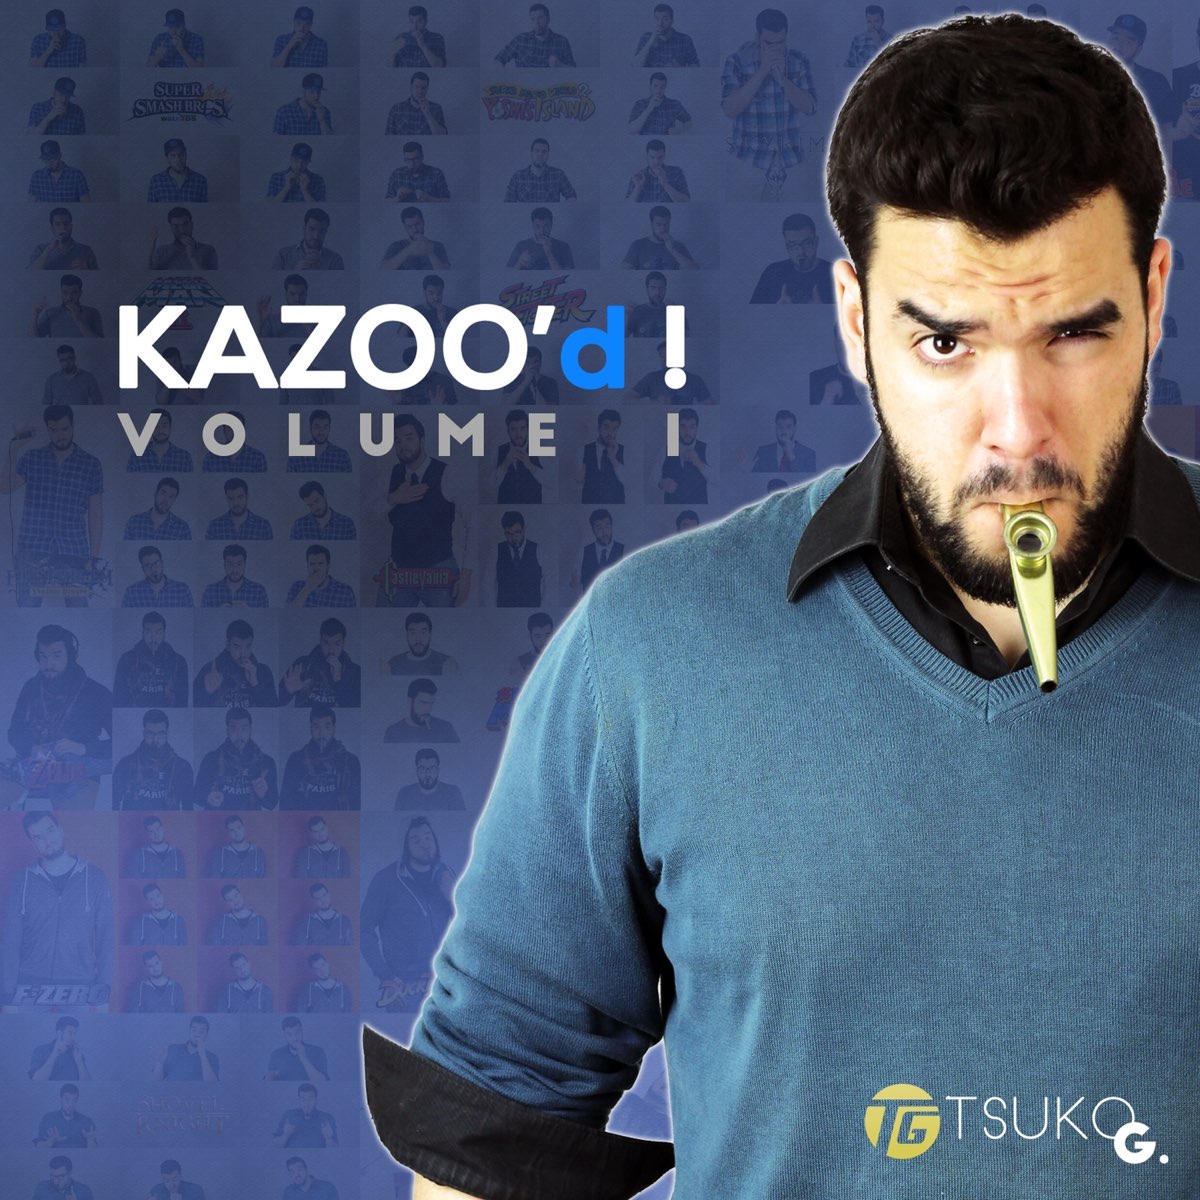 Kazoo'd! - Vol. 1 by Tsuko G. on Apple Music